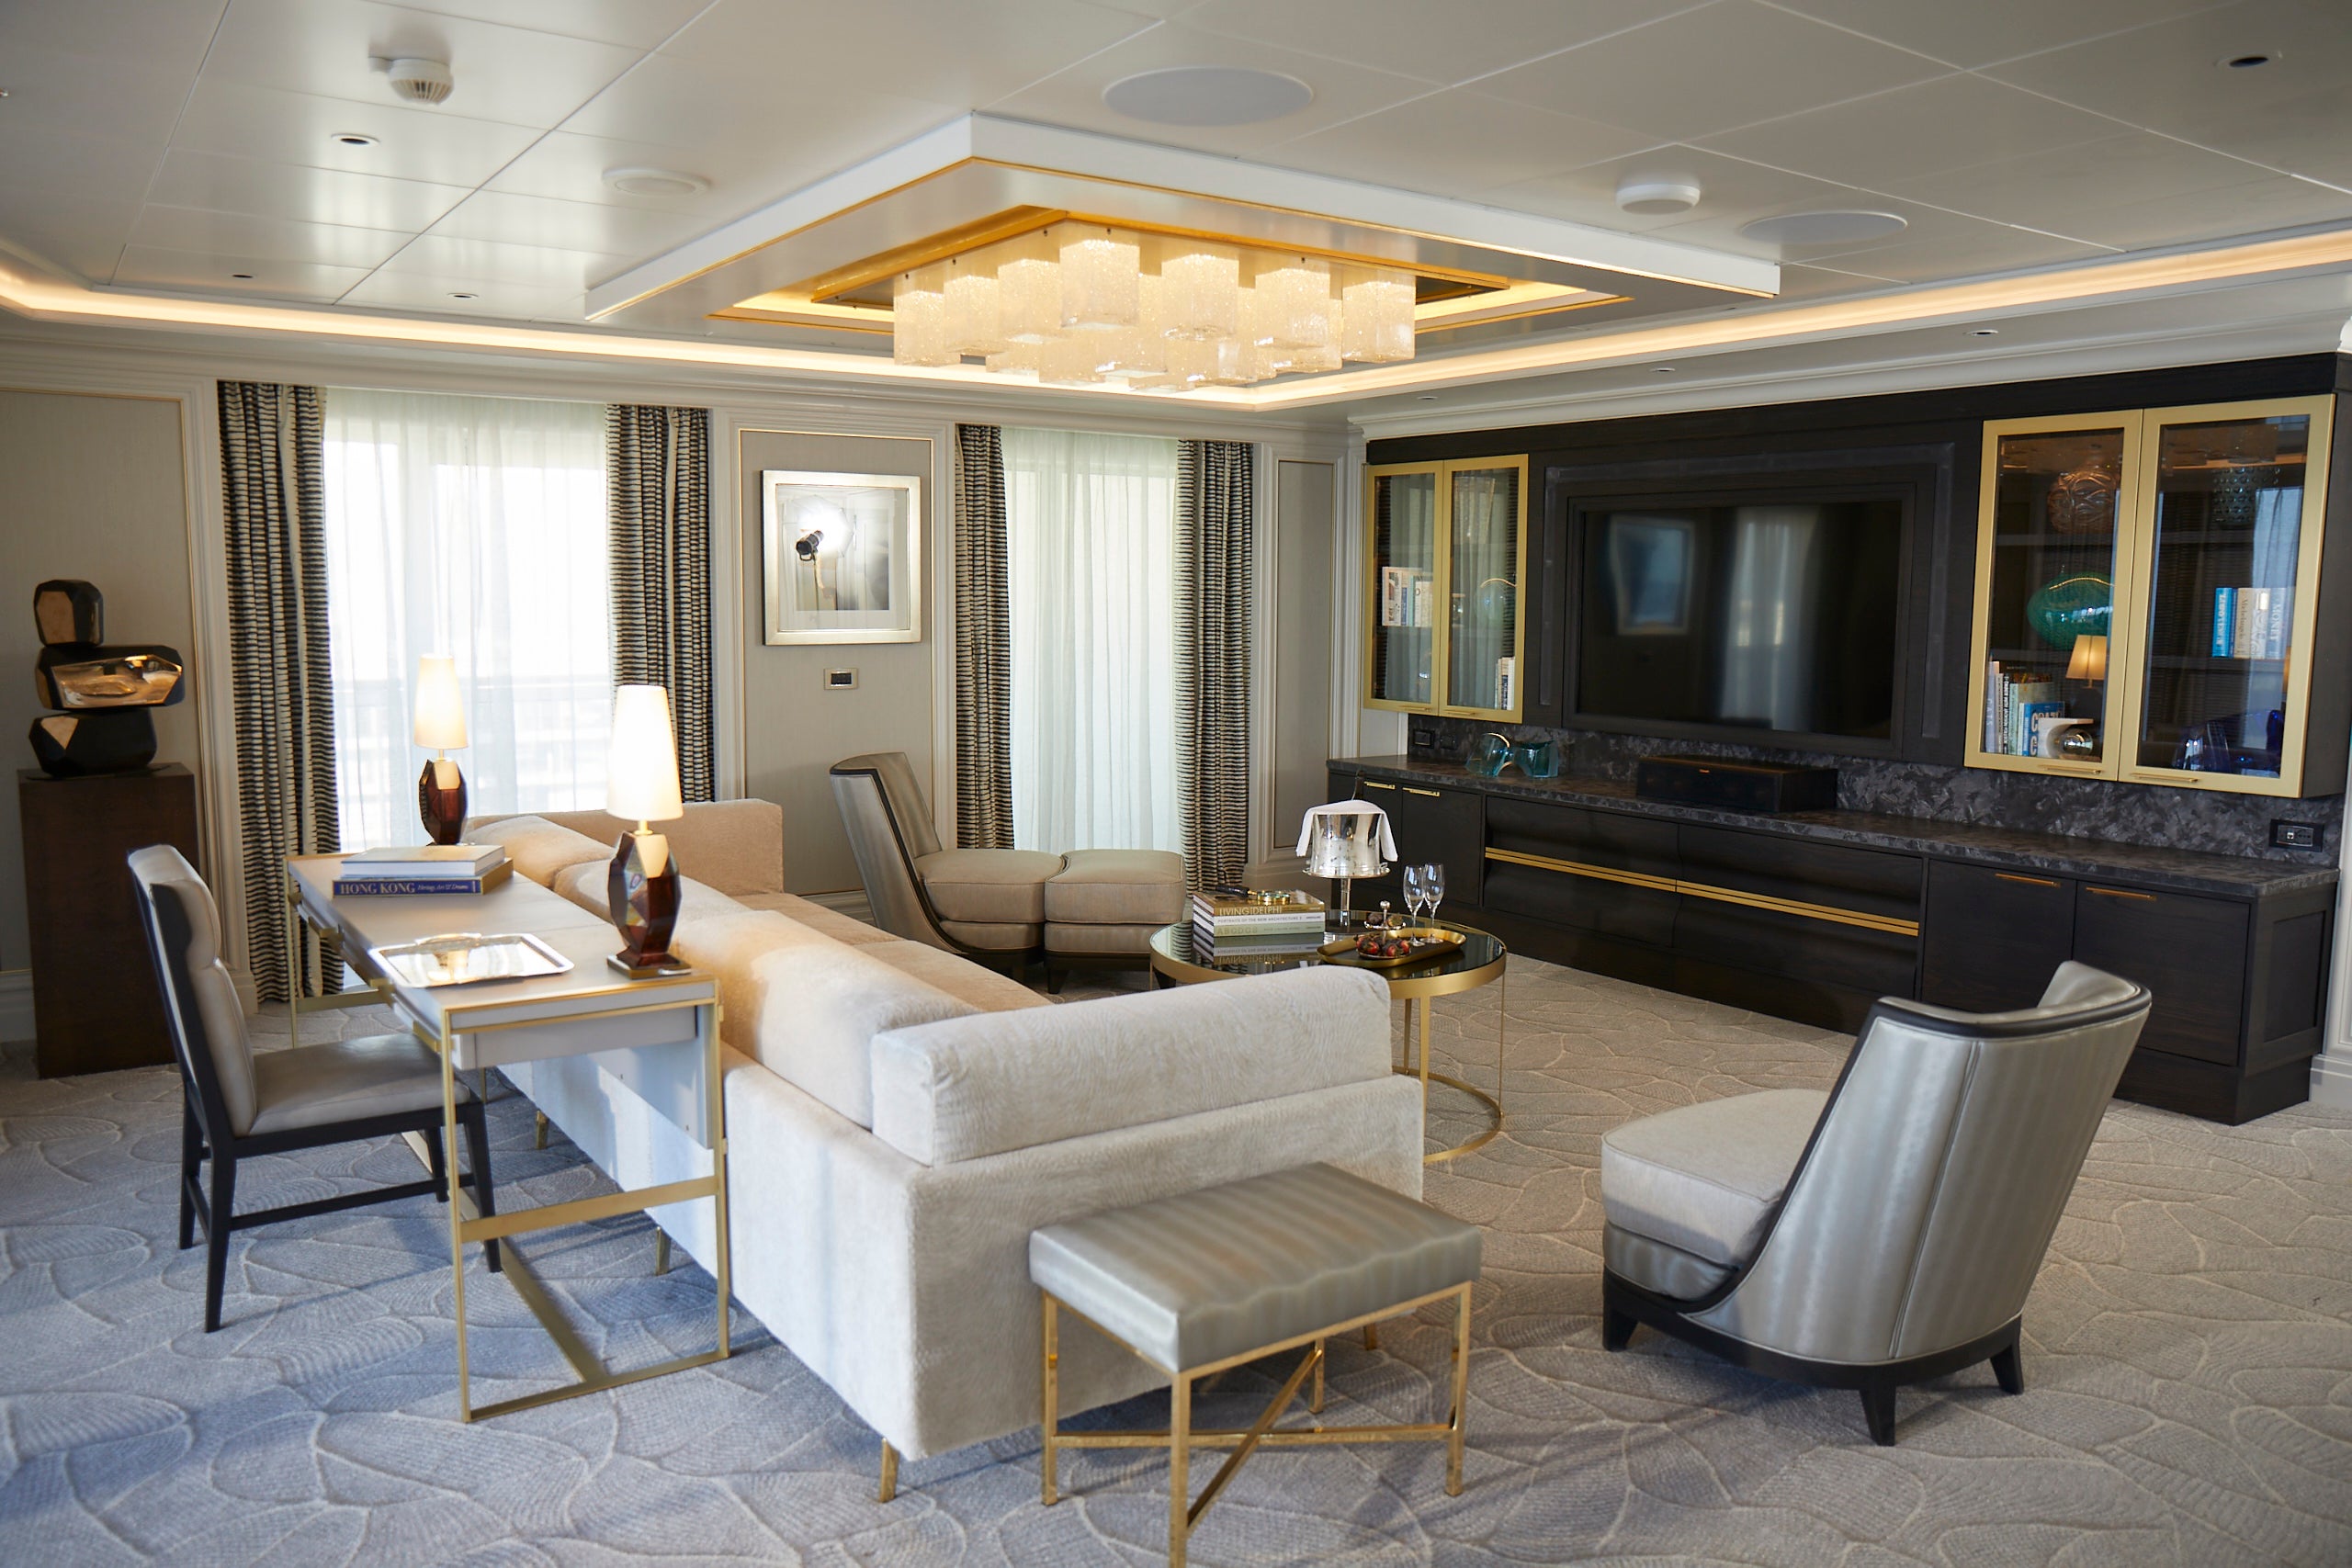 cruise ship interiors miami 2023